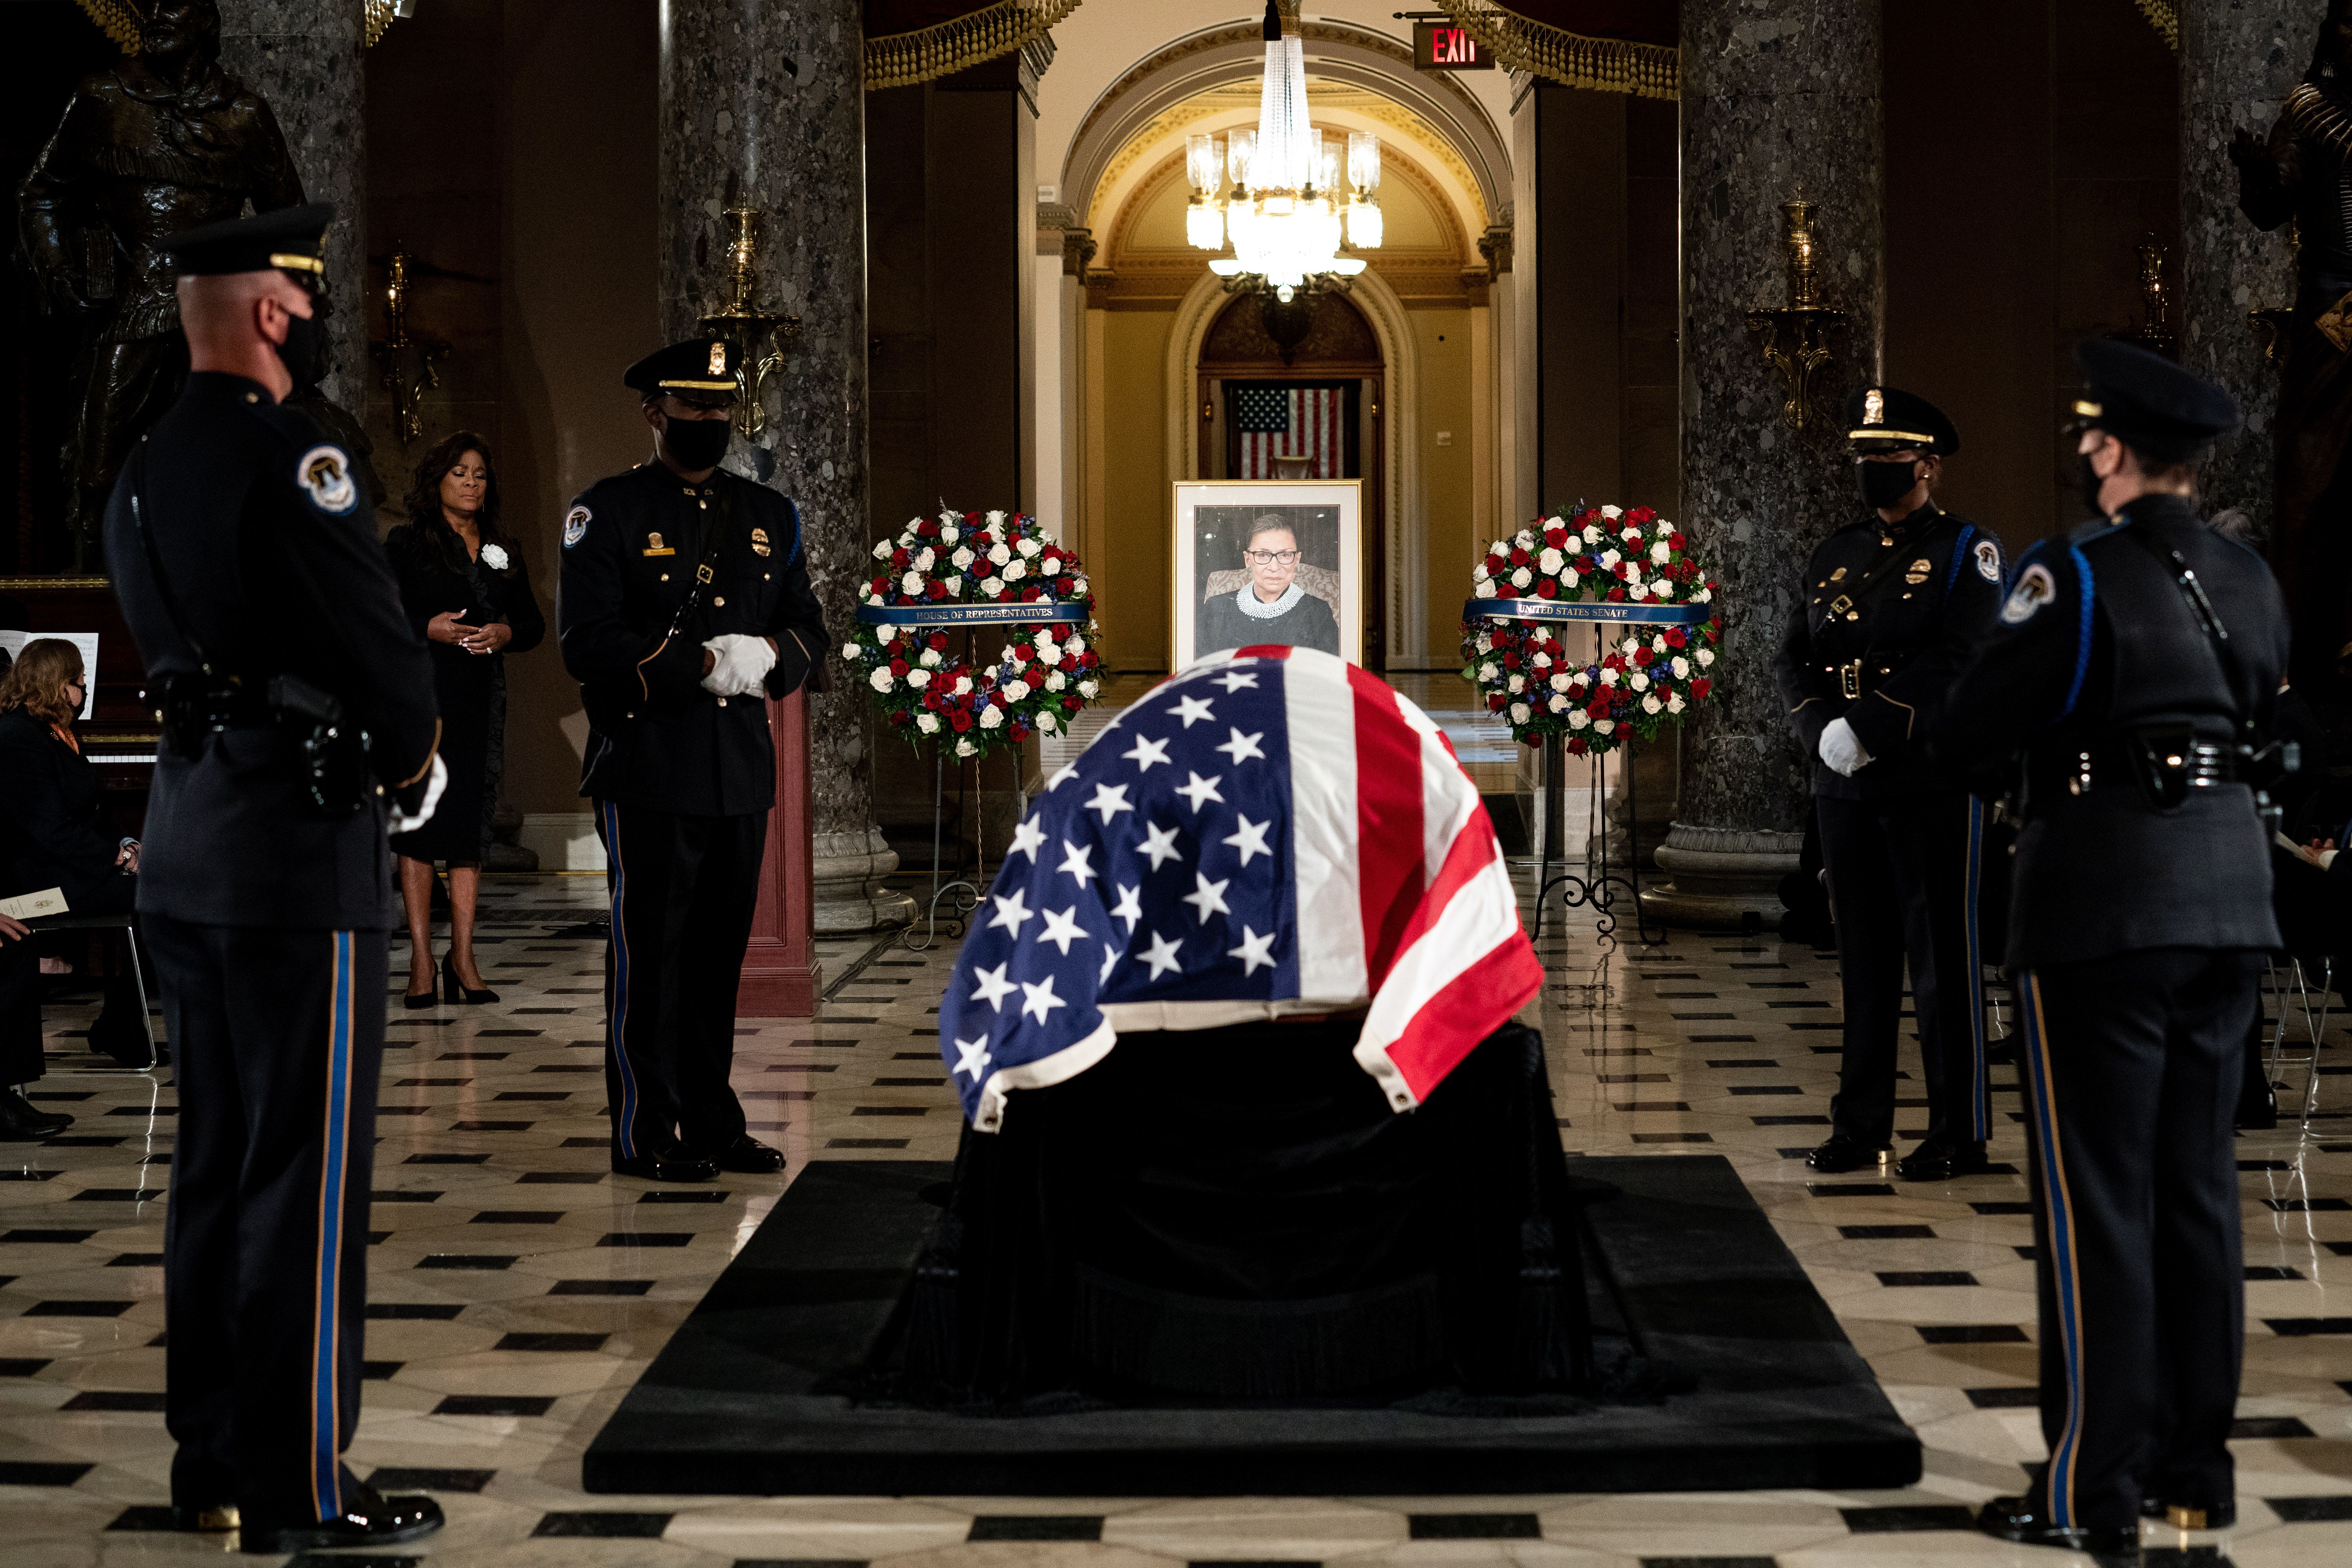 RBG's casket draped with a U.S. flag